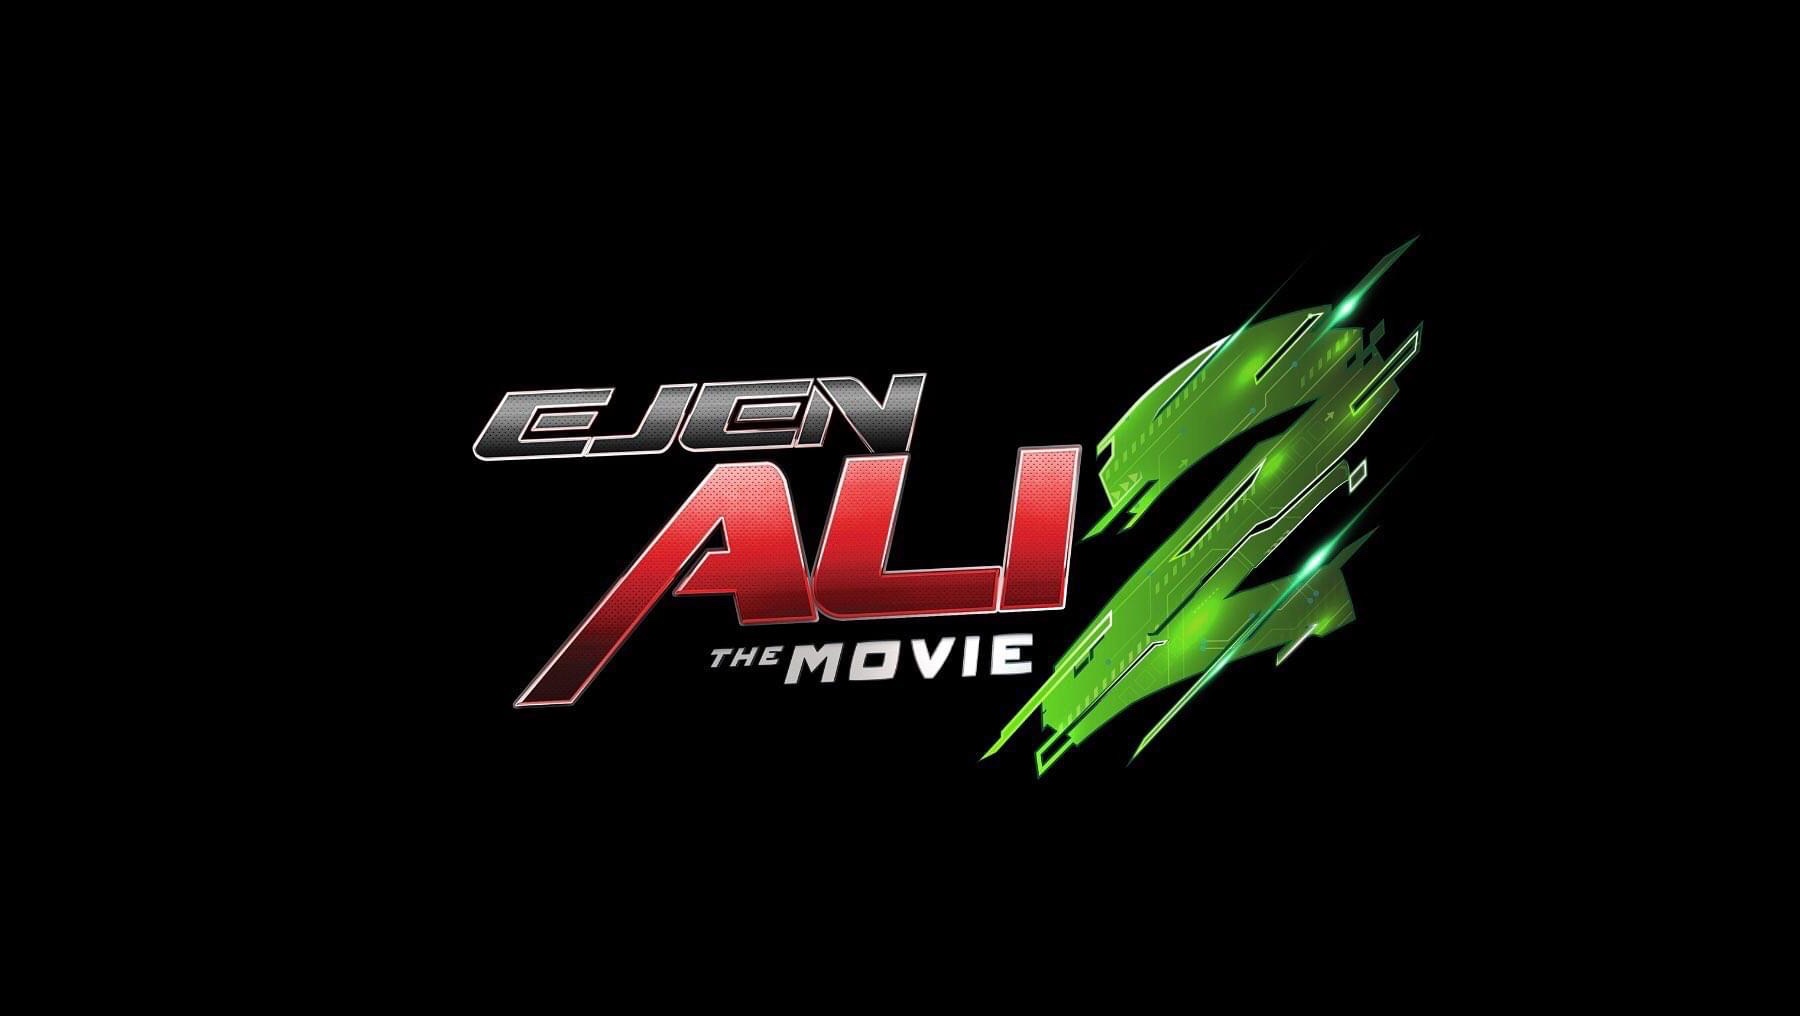 Ejen Ali The Movie 2 Akan Disiarkan Di Disney+ Secara Eksklusif Selepas Tayangan Pawagam